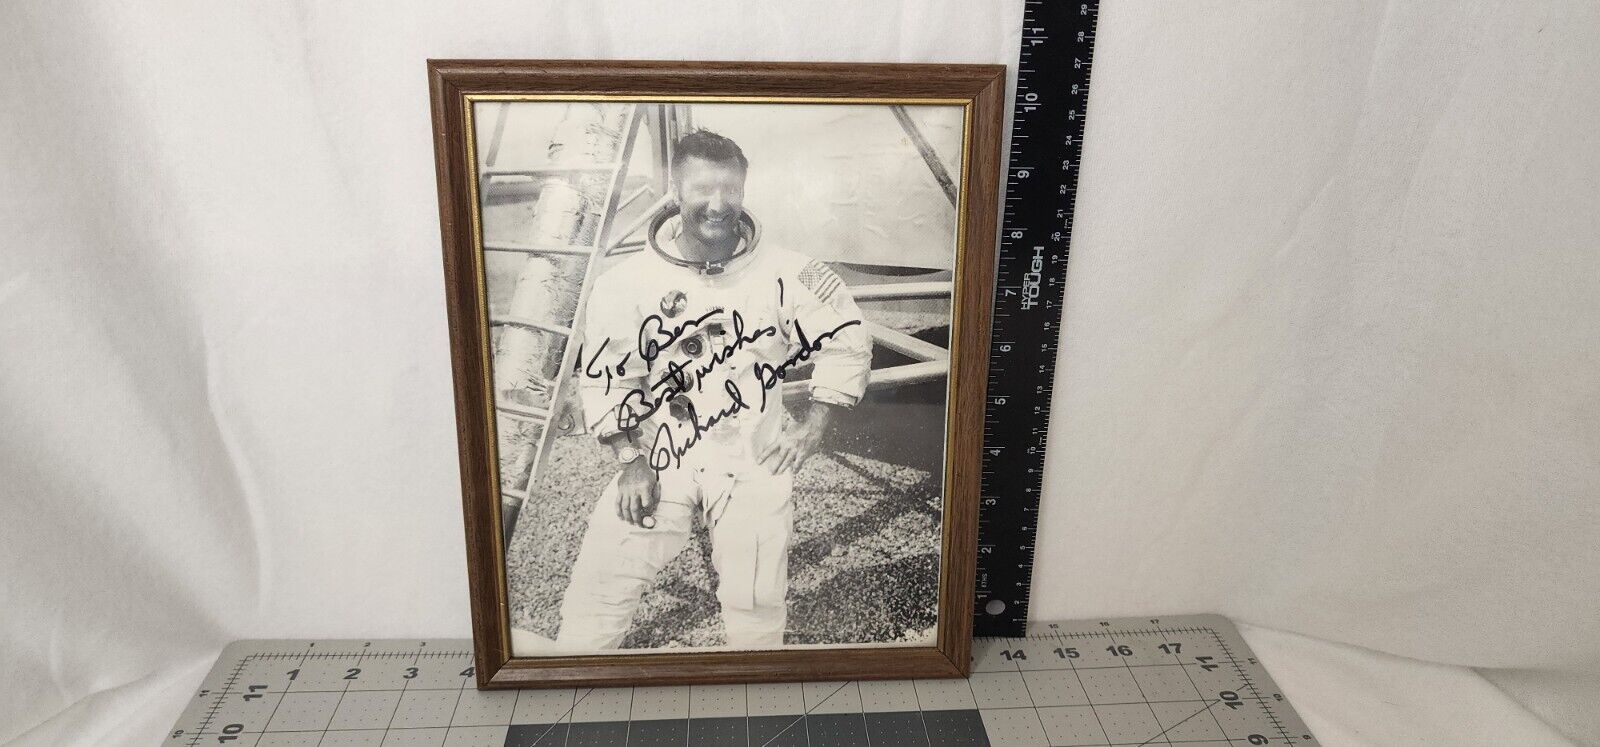 NASA RICHARD F. GORDON JR Autographed Signed 8x10 Signed Photograph B&W